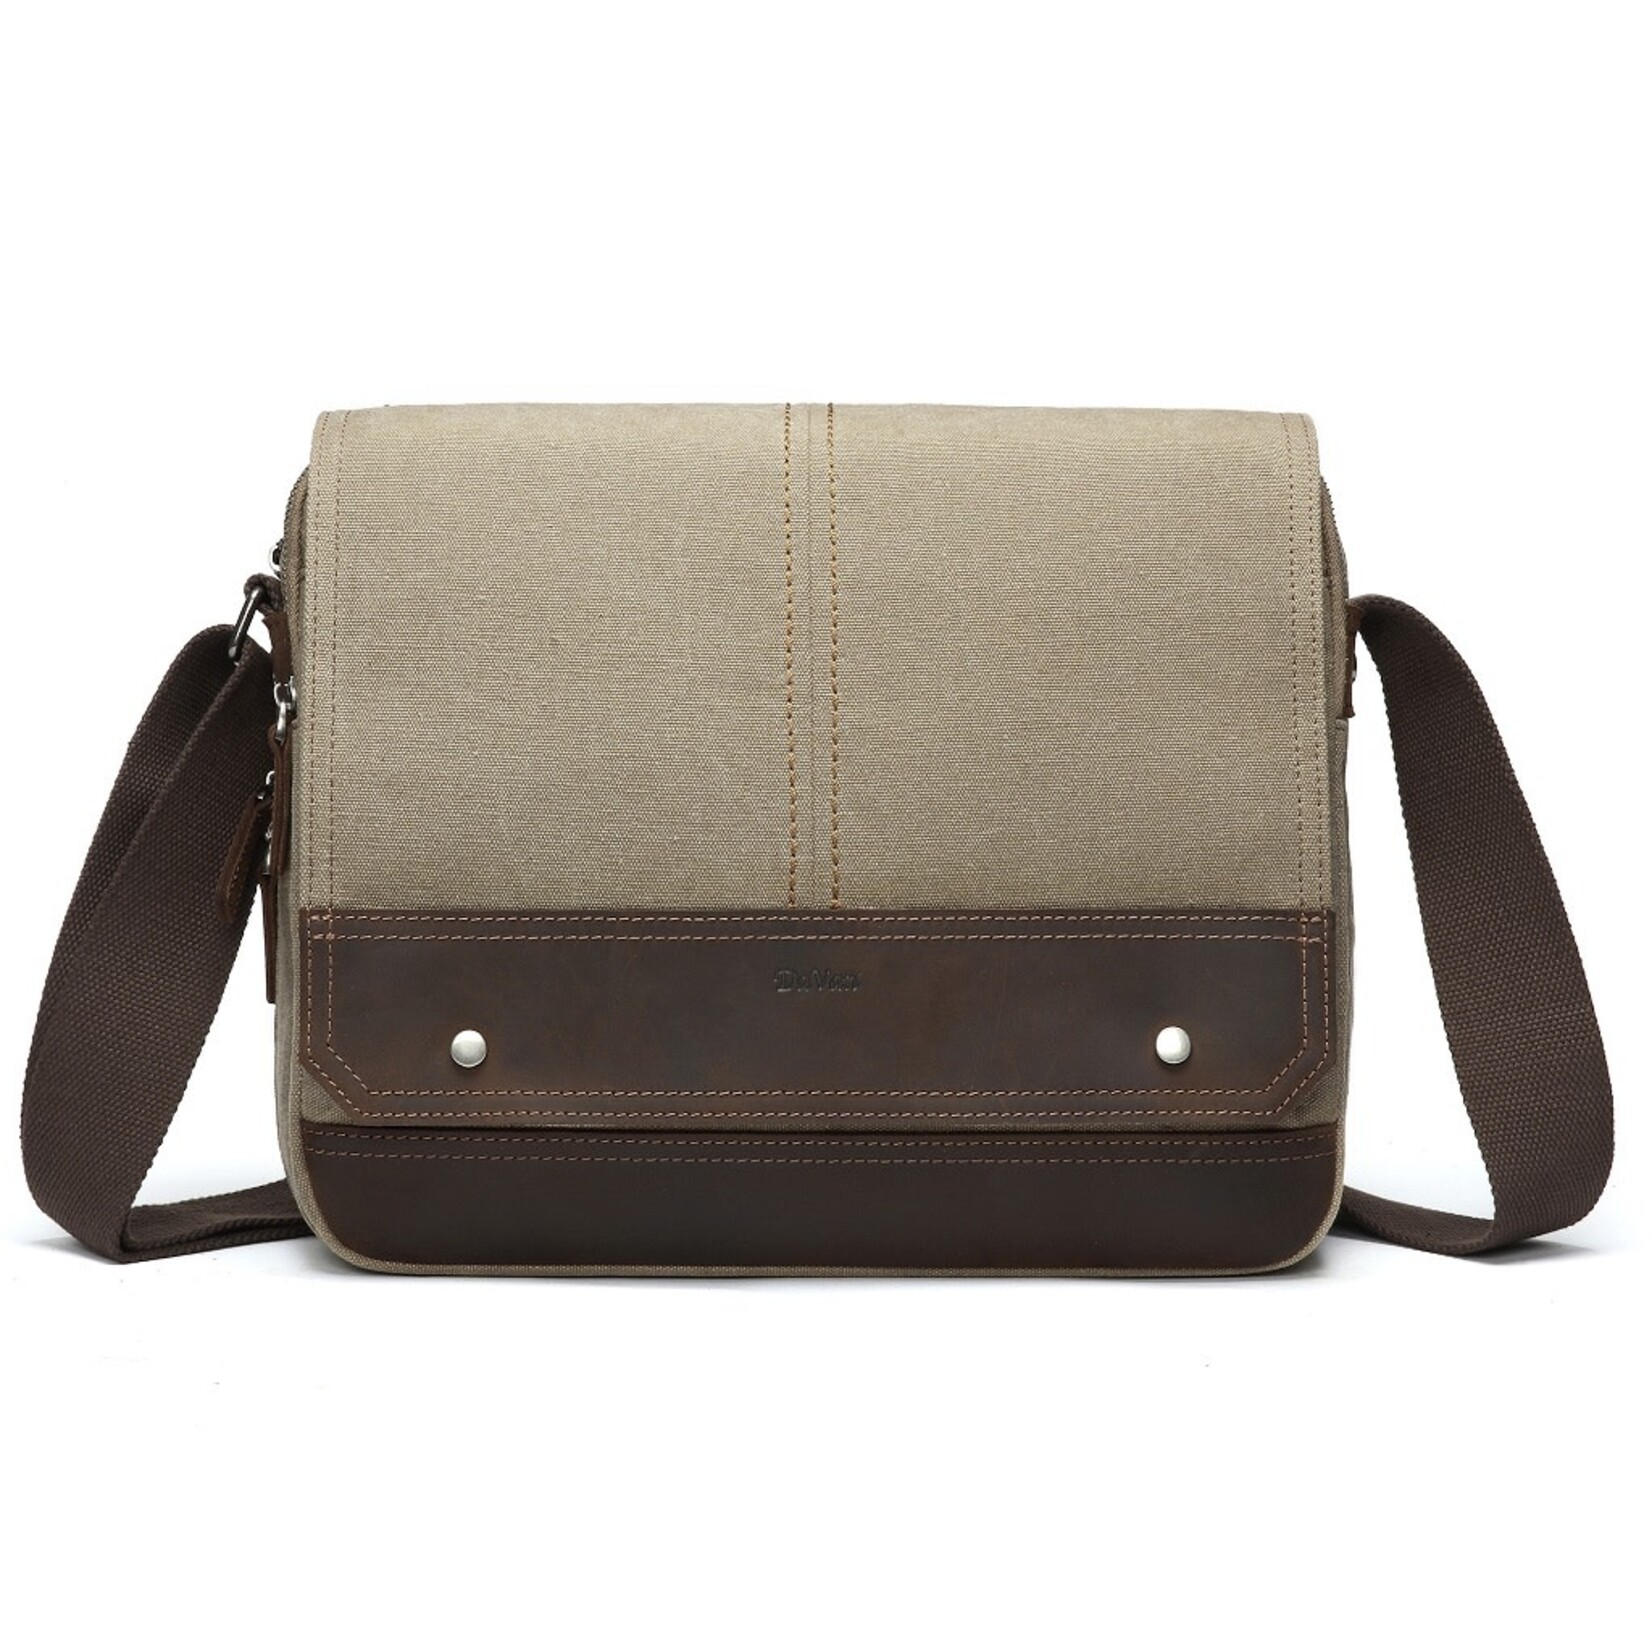 Messenger Bag Khaki Canvas w Flap & Leather Trim